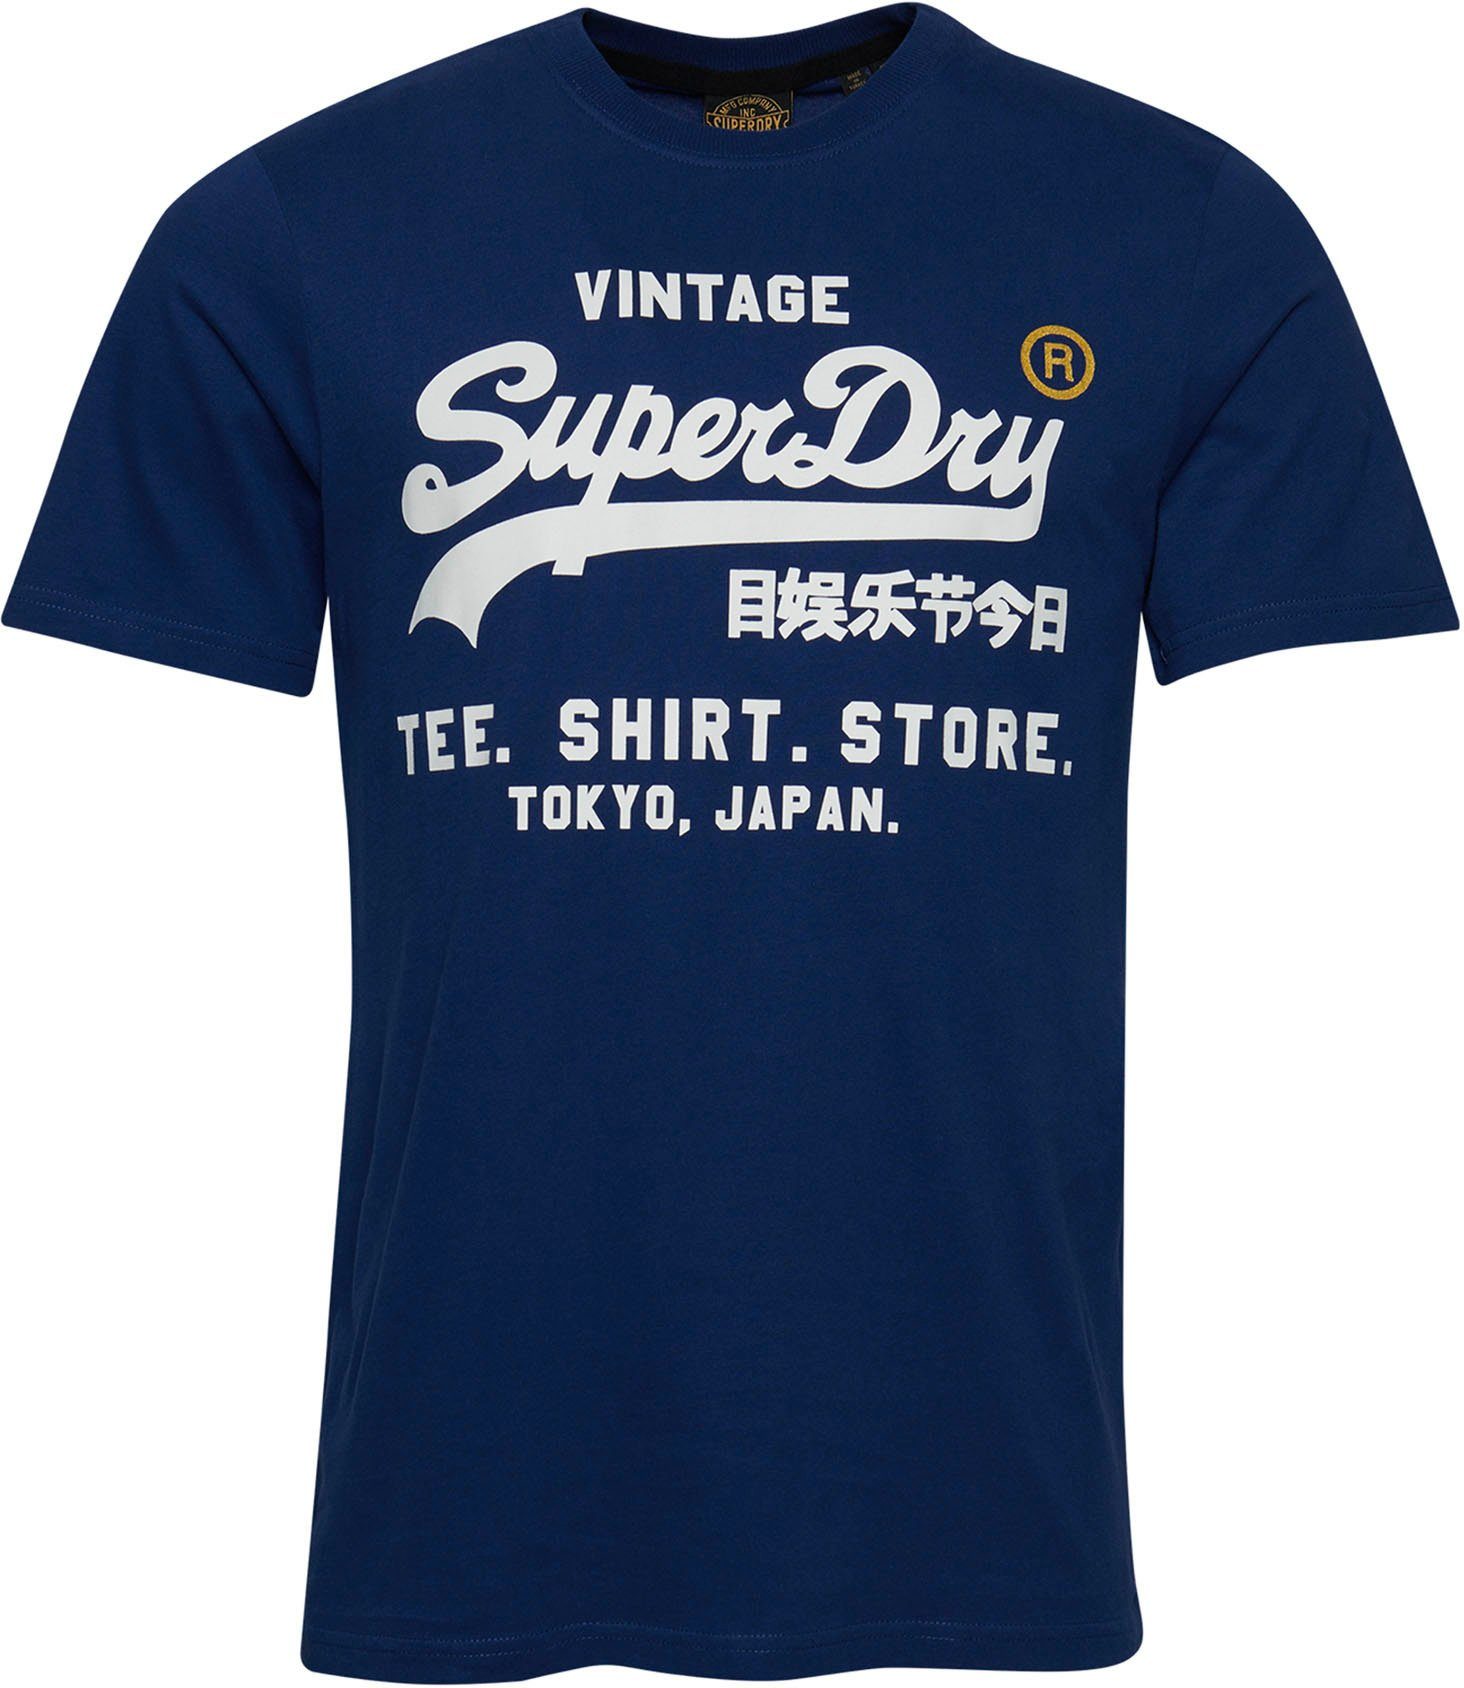 Superdry T-Shirt VINTAGE VL STORE TEE Supermarine CLASSIC Navy